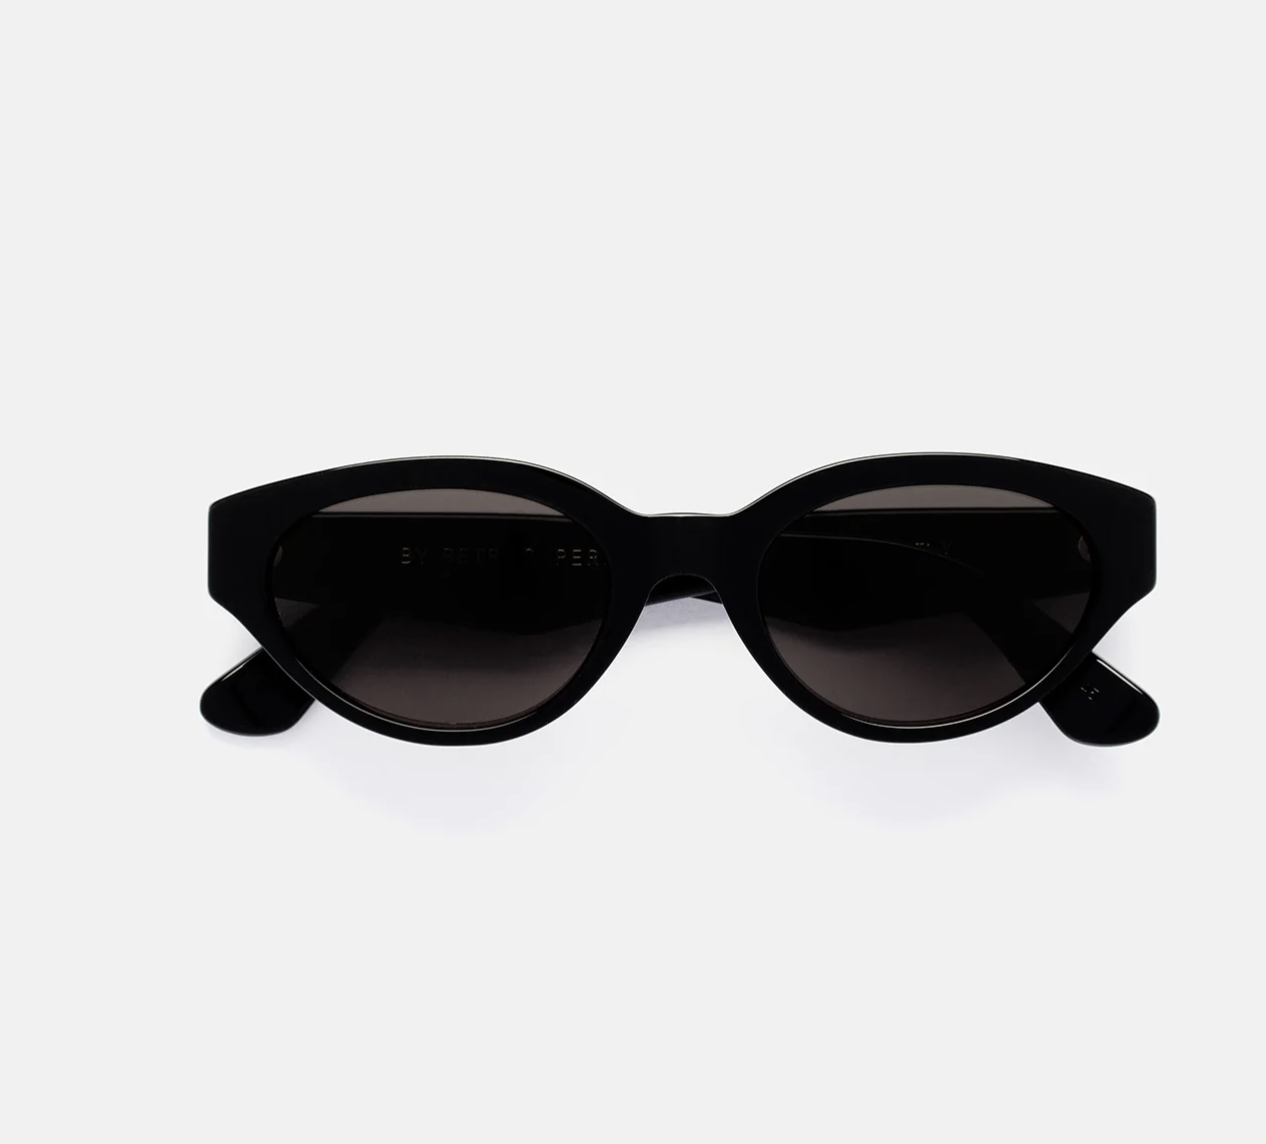 21 Best Sunglasses Under $100 2020 | The Strategist